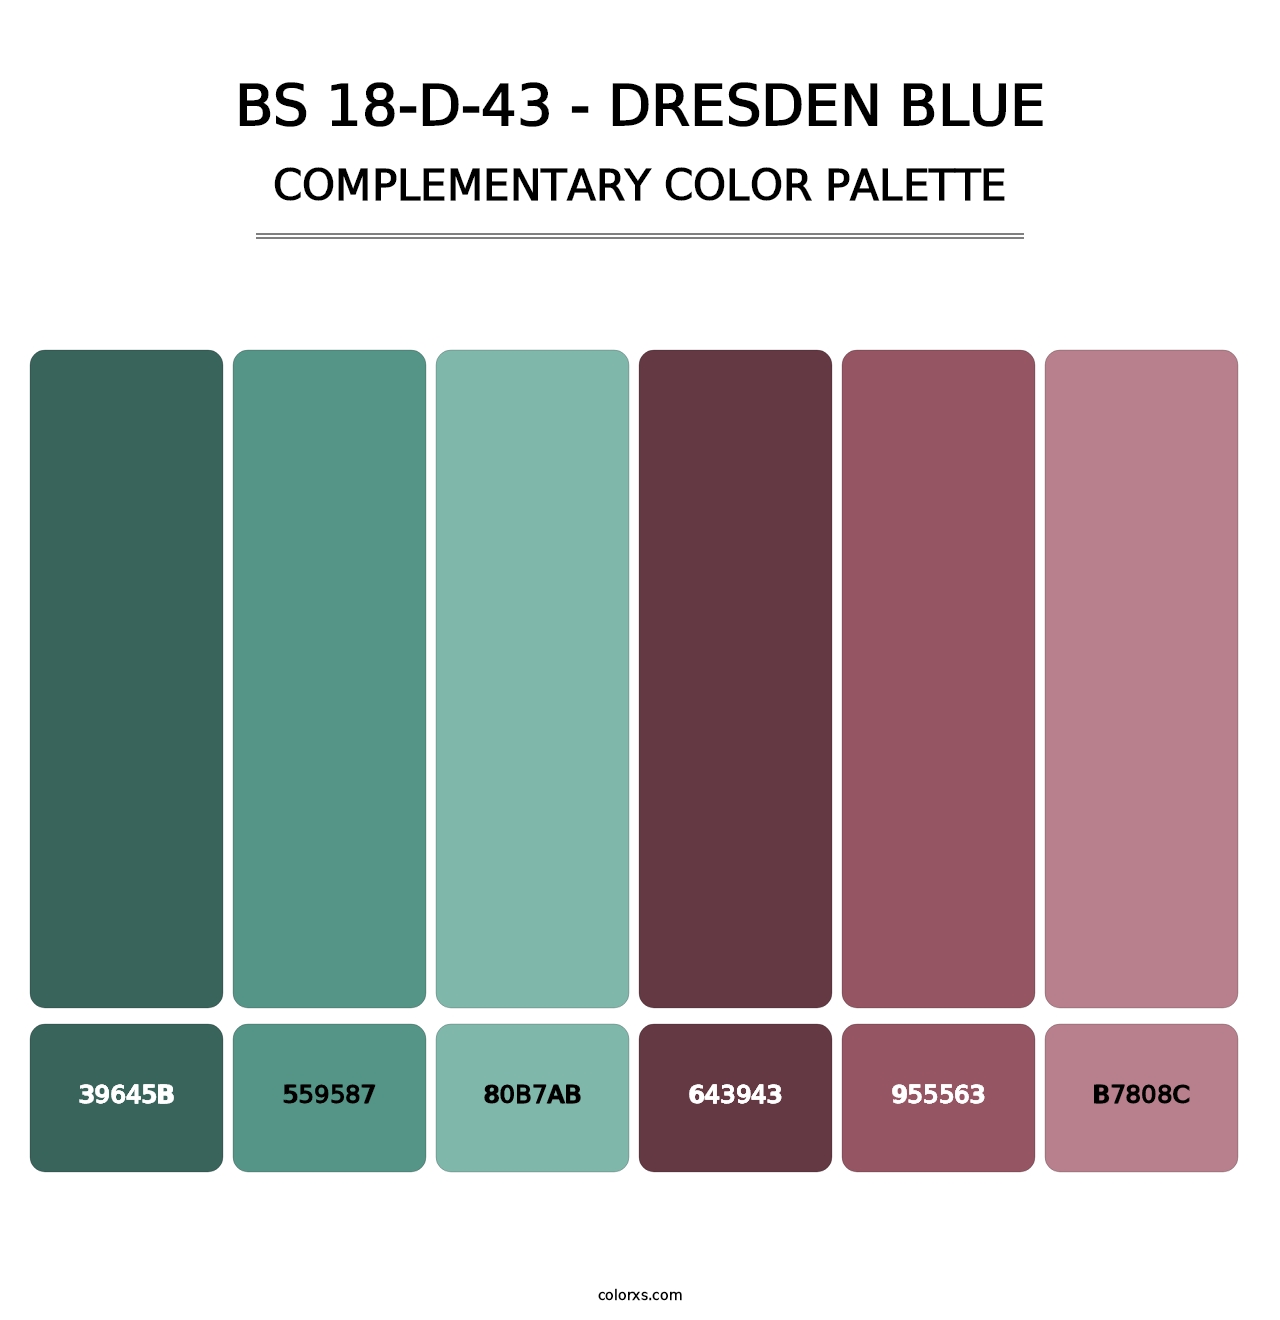 BS 18-D-43 - Dresden Blue - Complementary Color Palette